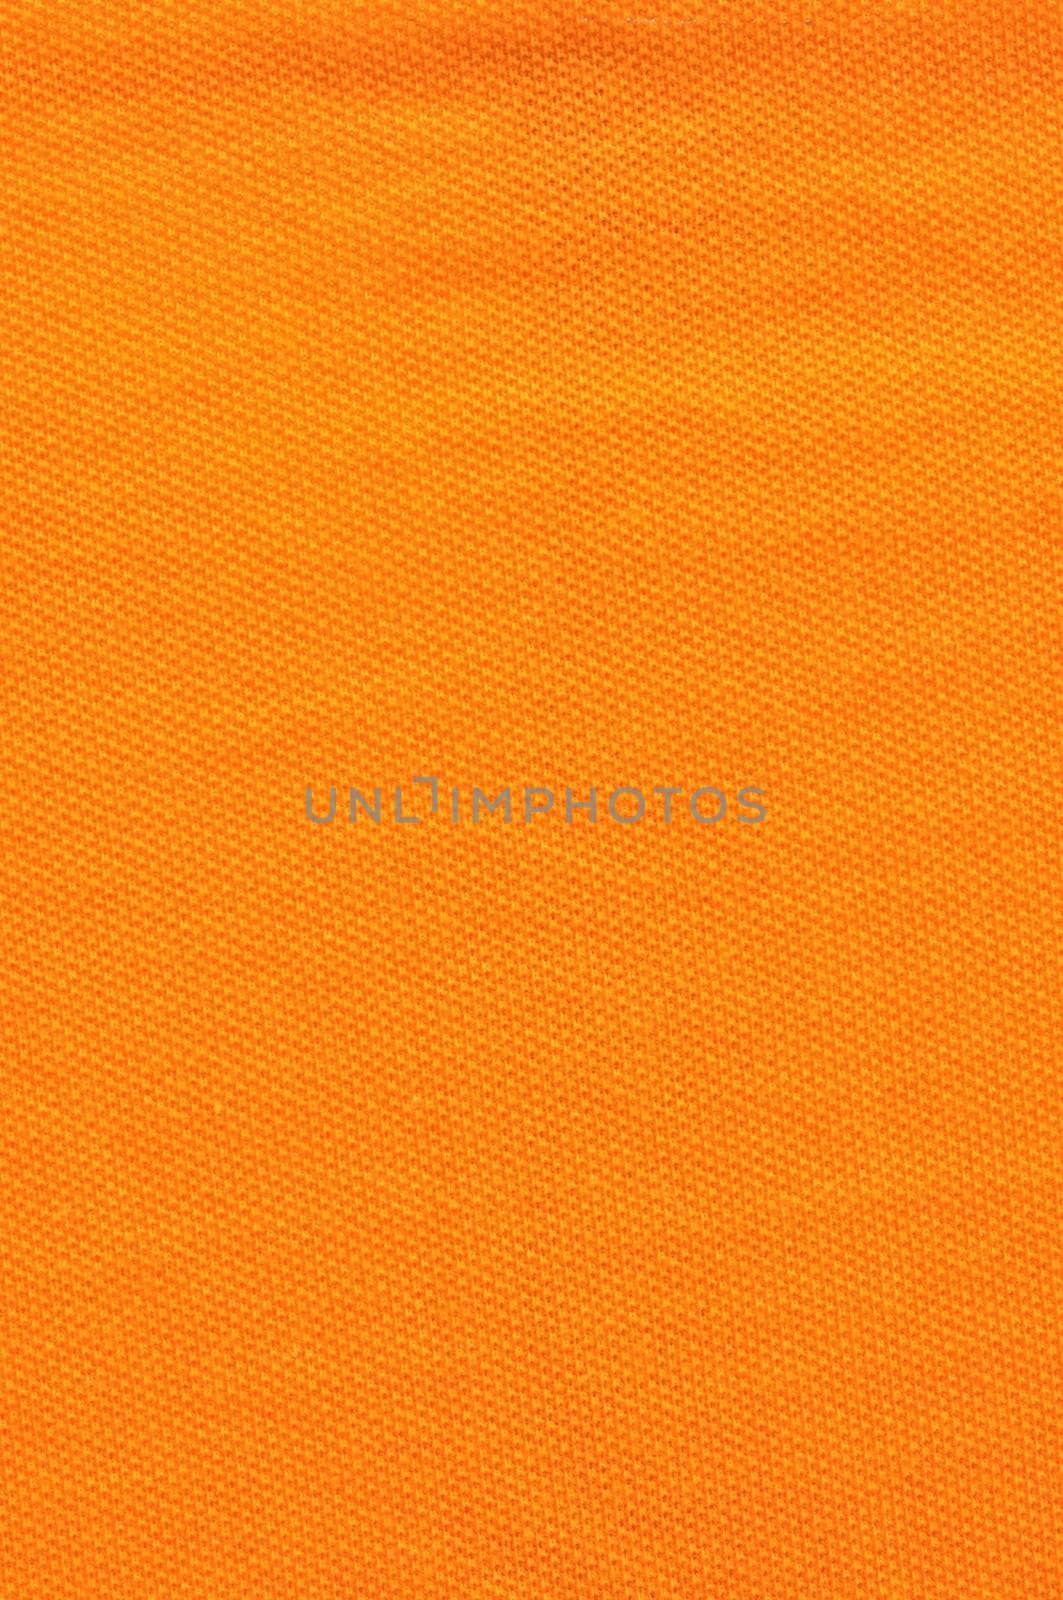 Texture Background of orange fabric